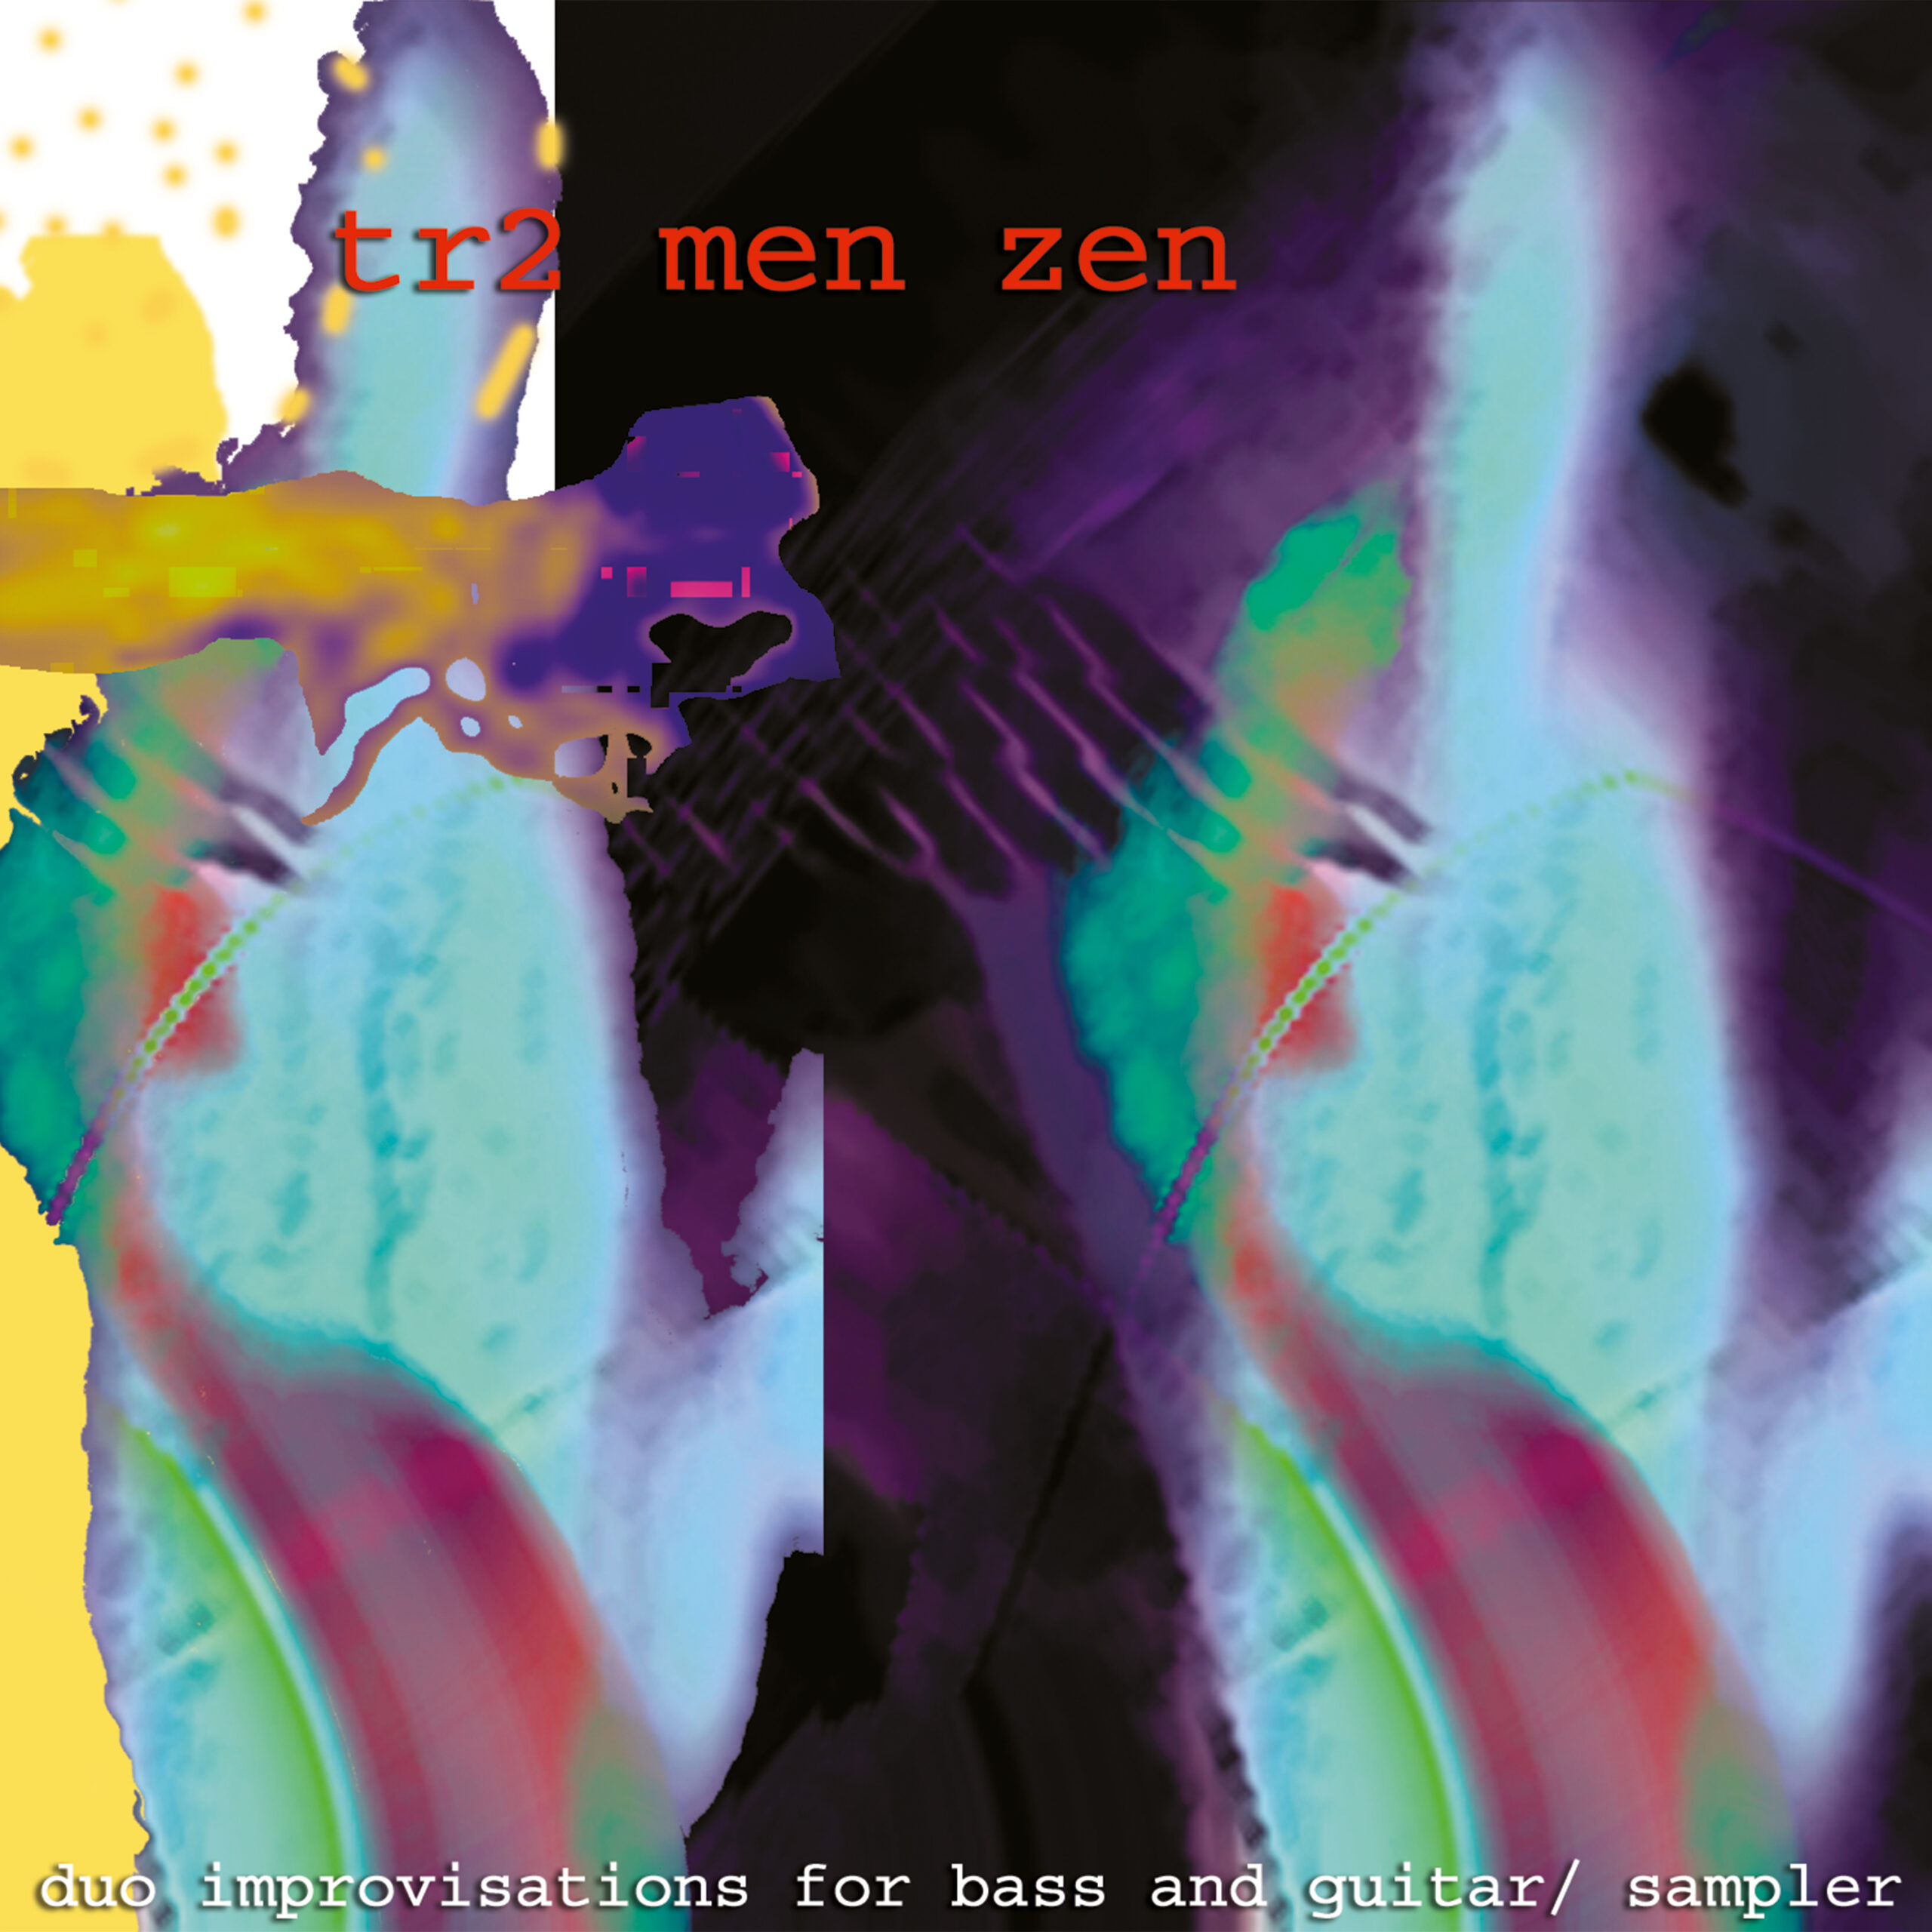 Read more about the article tr2 men zen |Wolfgang in der wiesche & Michael Kusmierz | upcoming album release